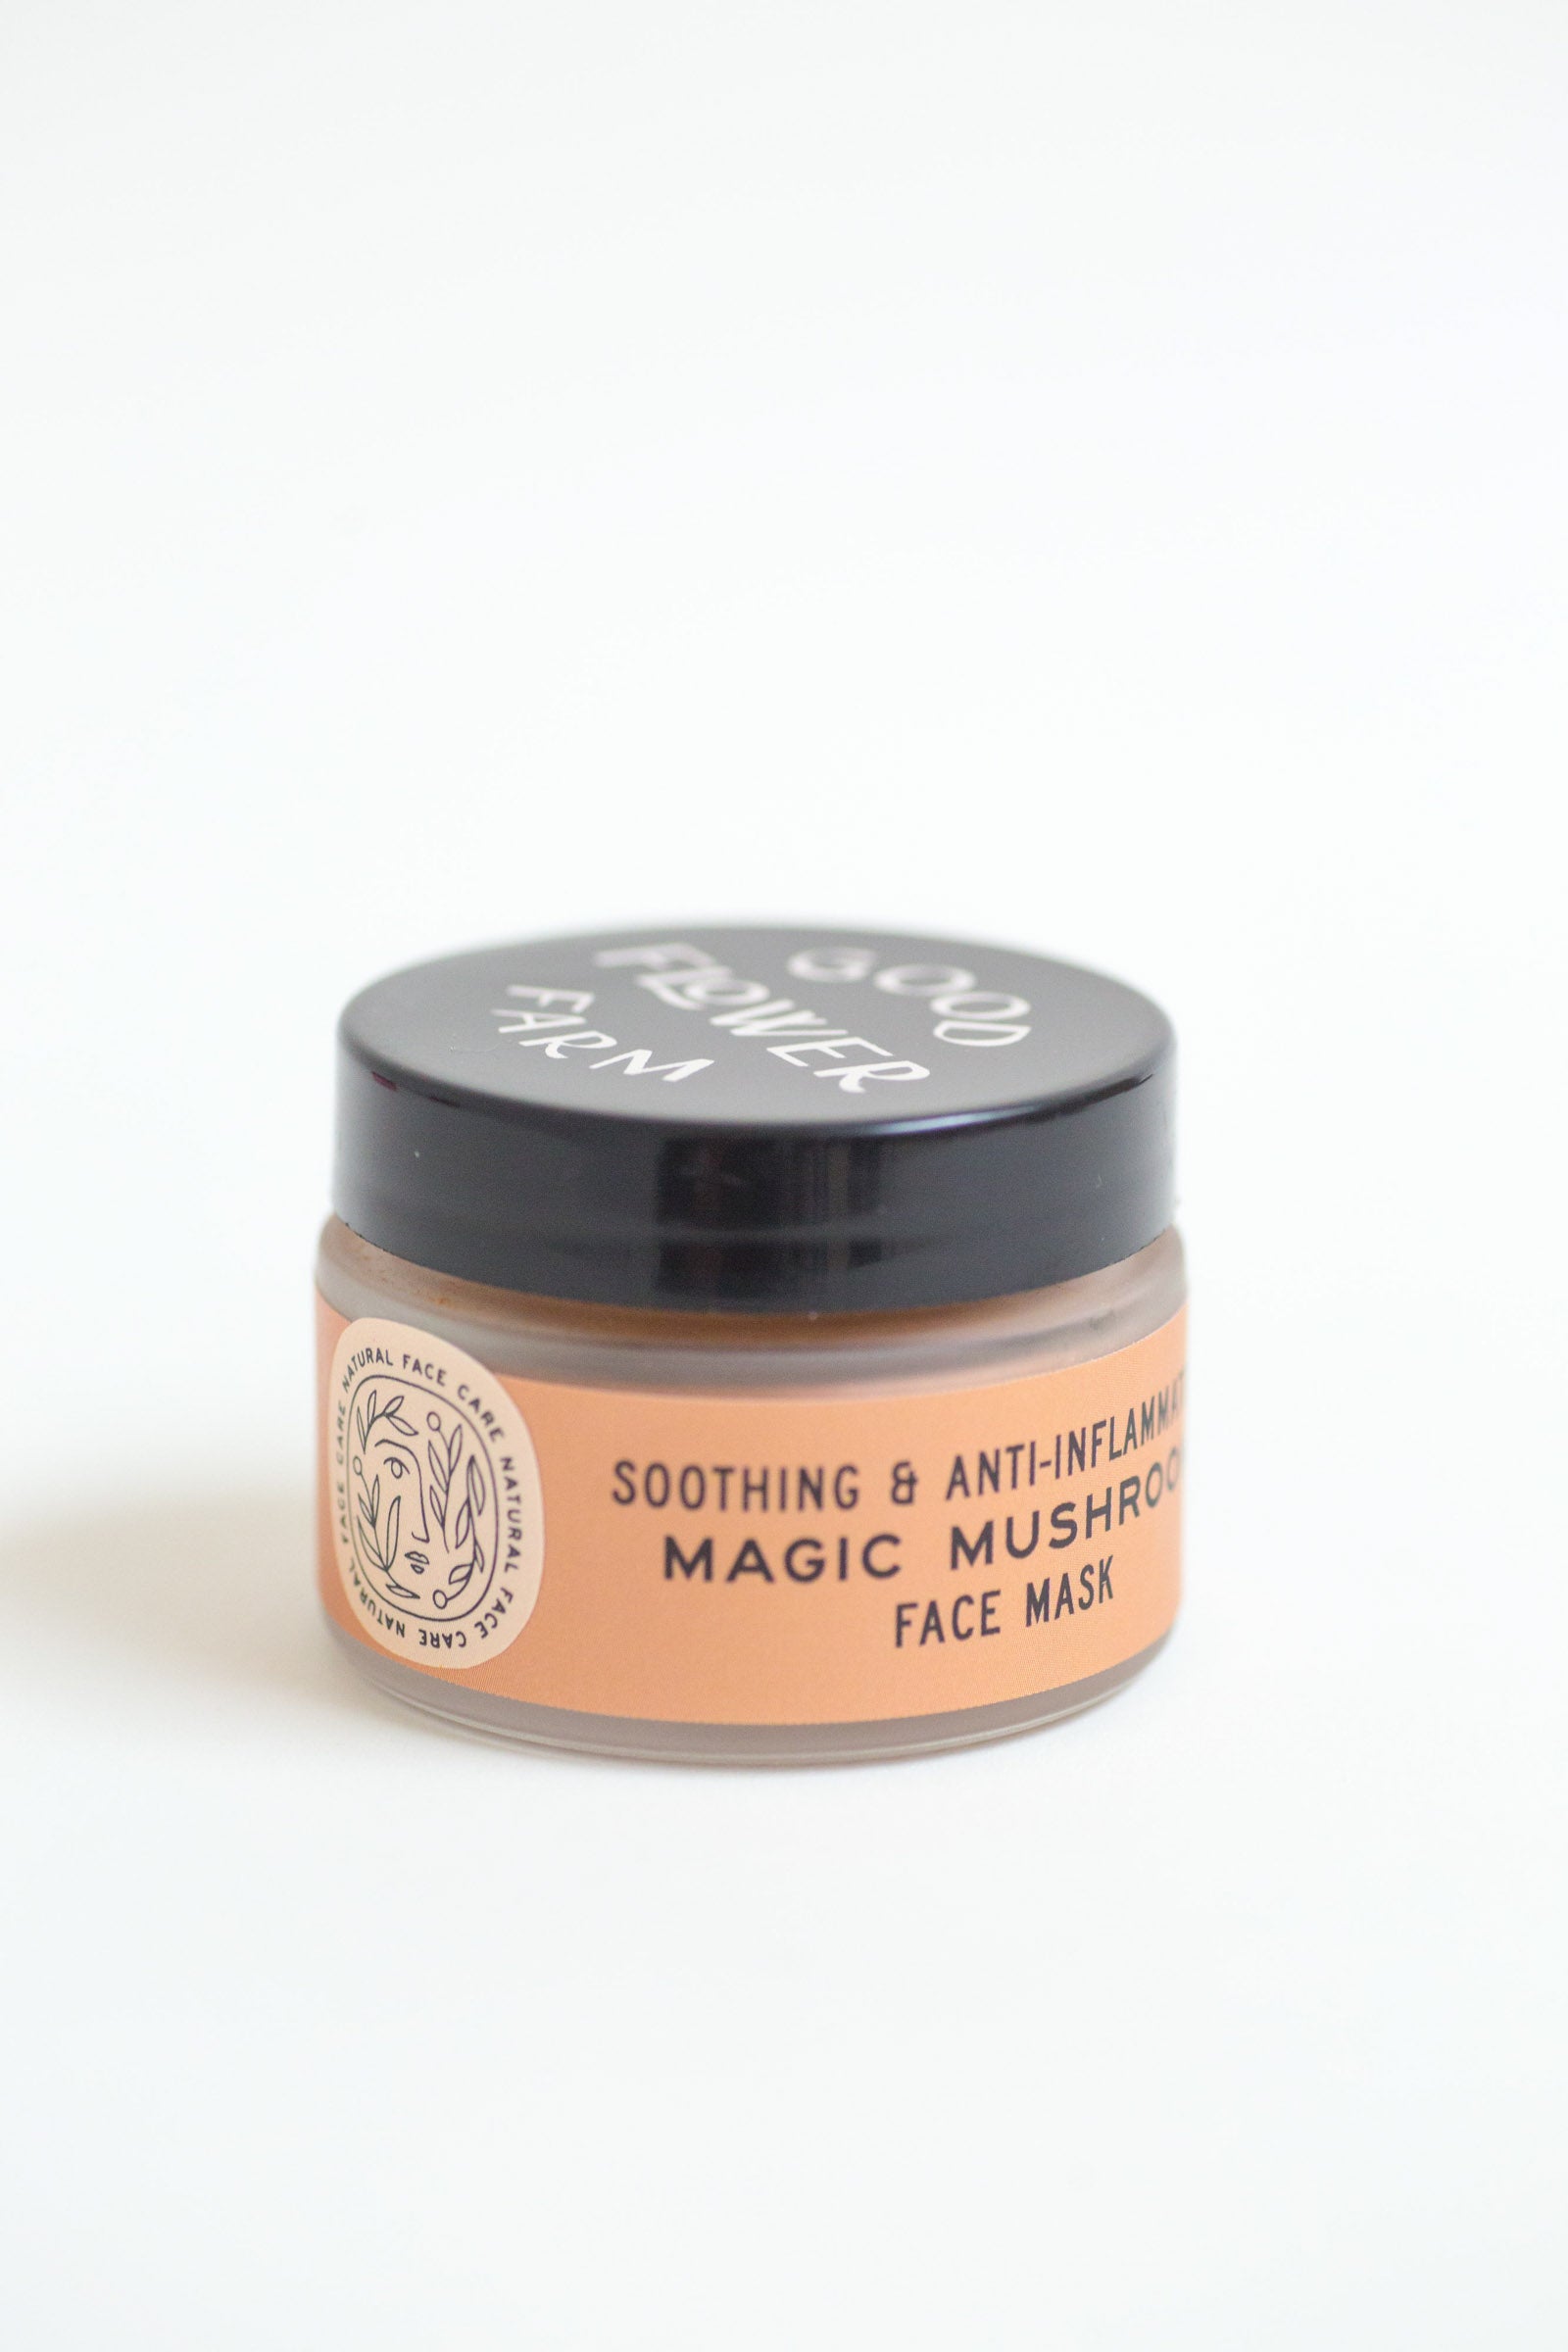 Magic Mushroom organic botanical clay face mask by Good Flower Farm